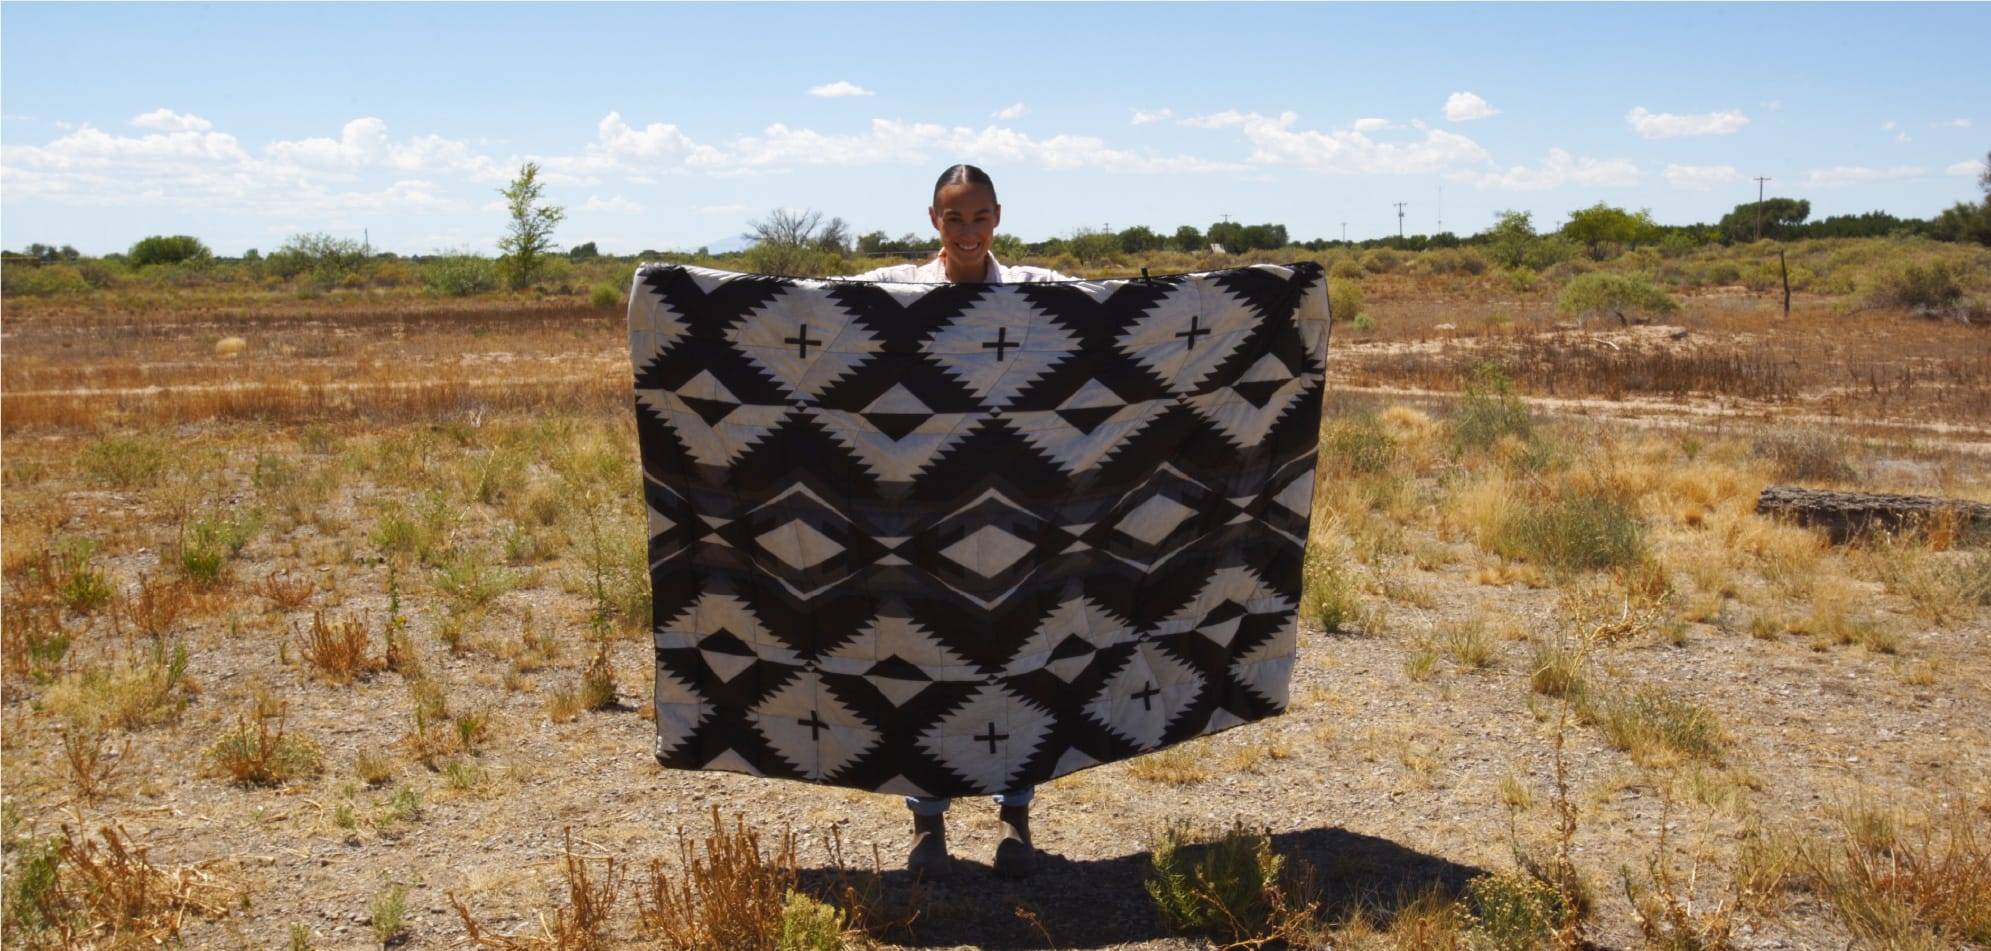 Jordan Craig holding her Woven Daydream native blanket